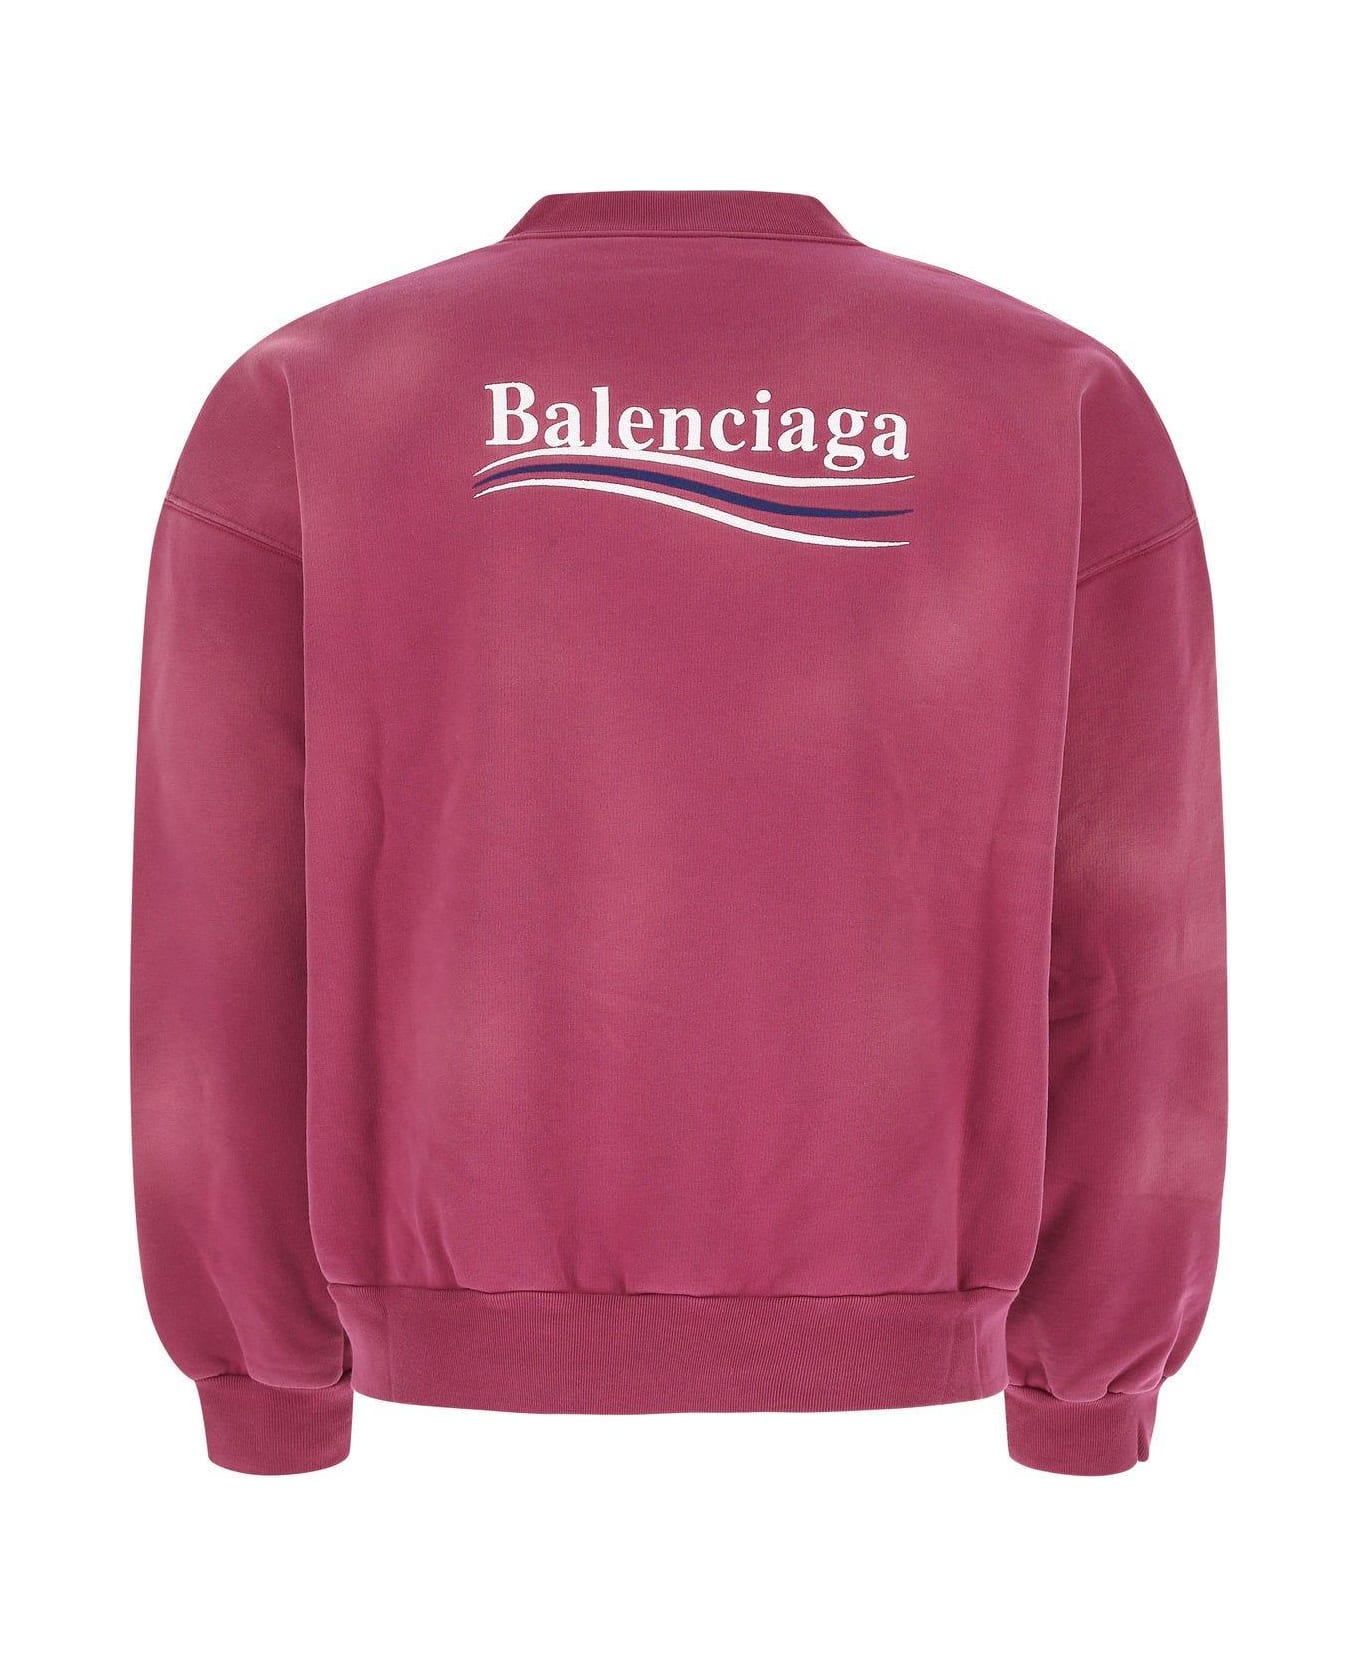 Balenciaga Tyrian Purple Cotton Oversize Sweatshirt - FUCHSIA フリース